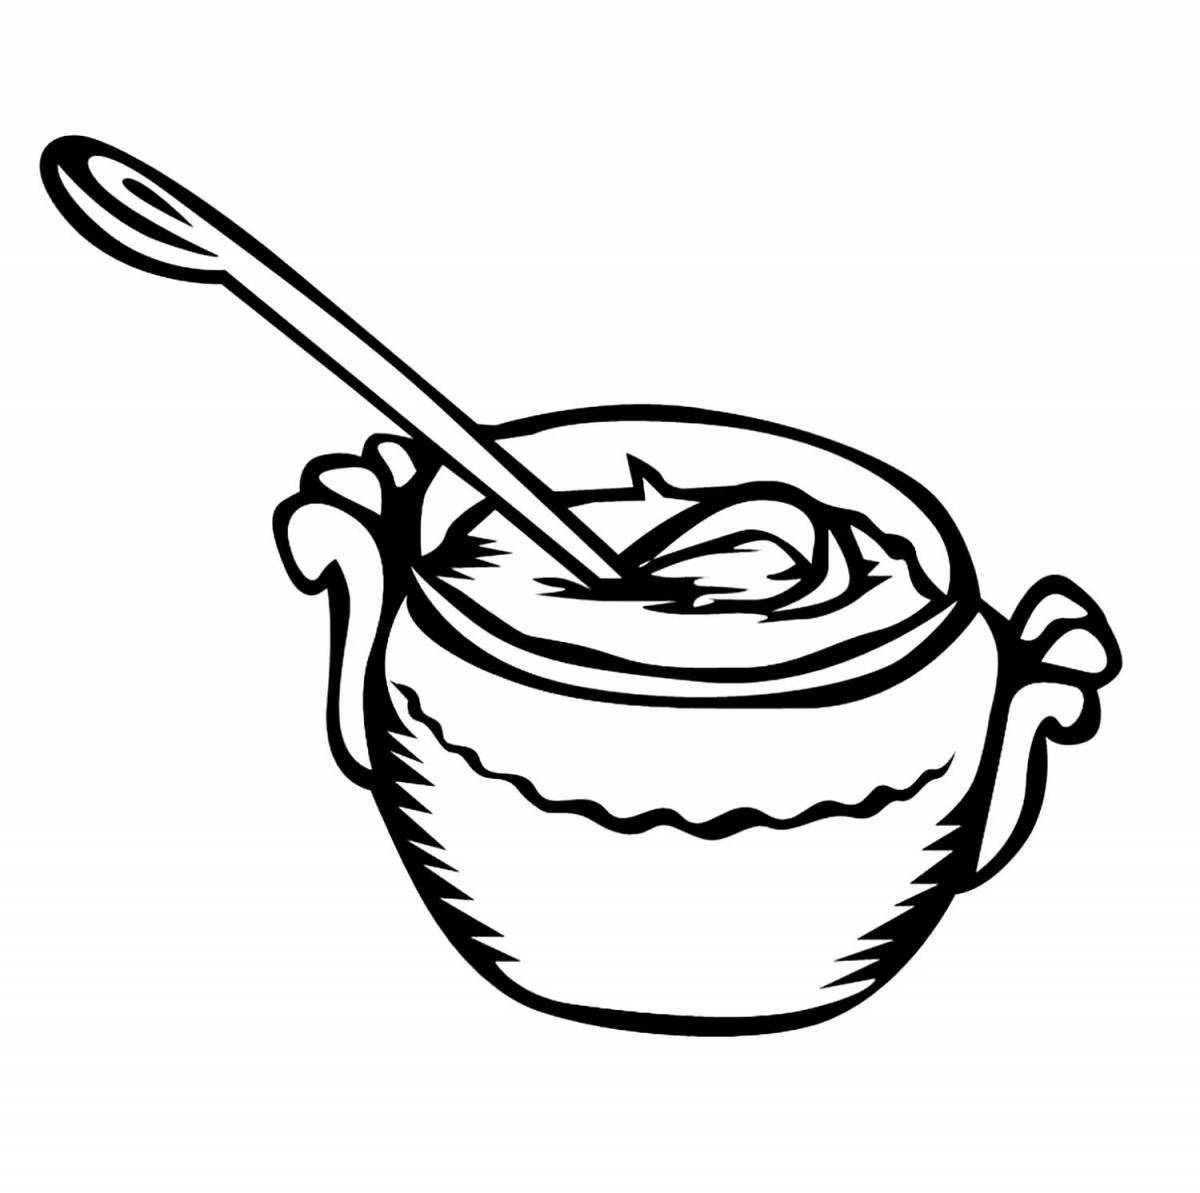 Spicy pot of porridge